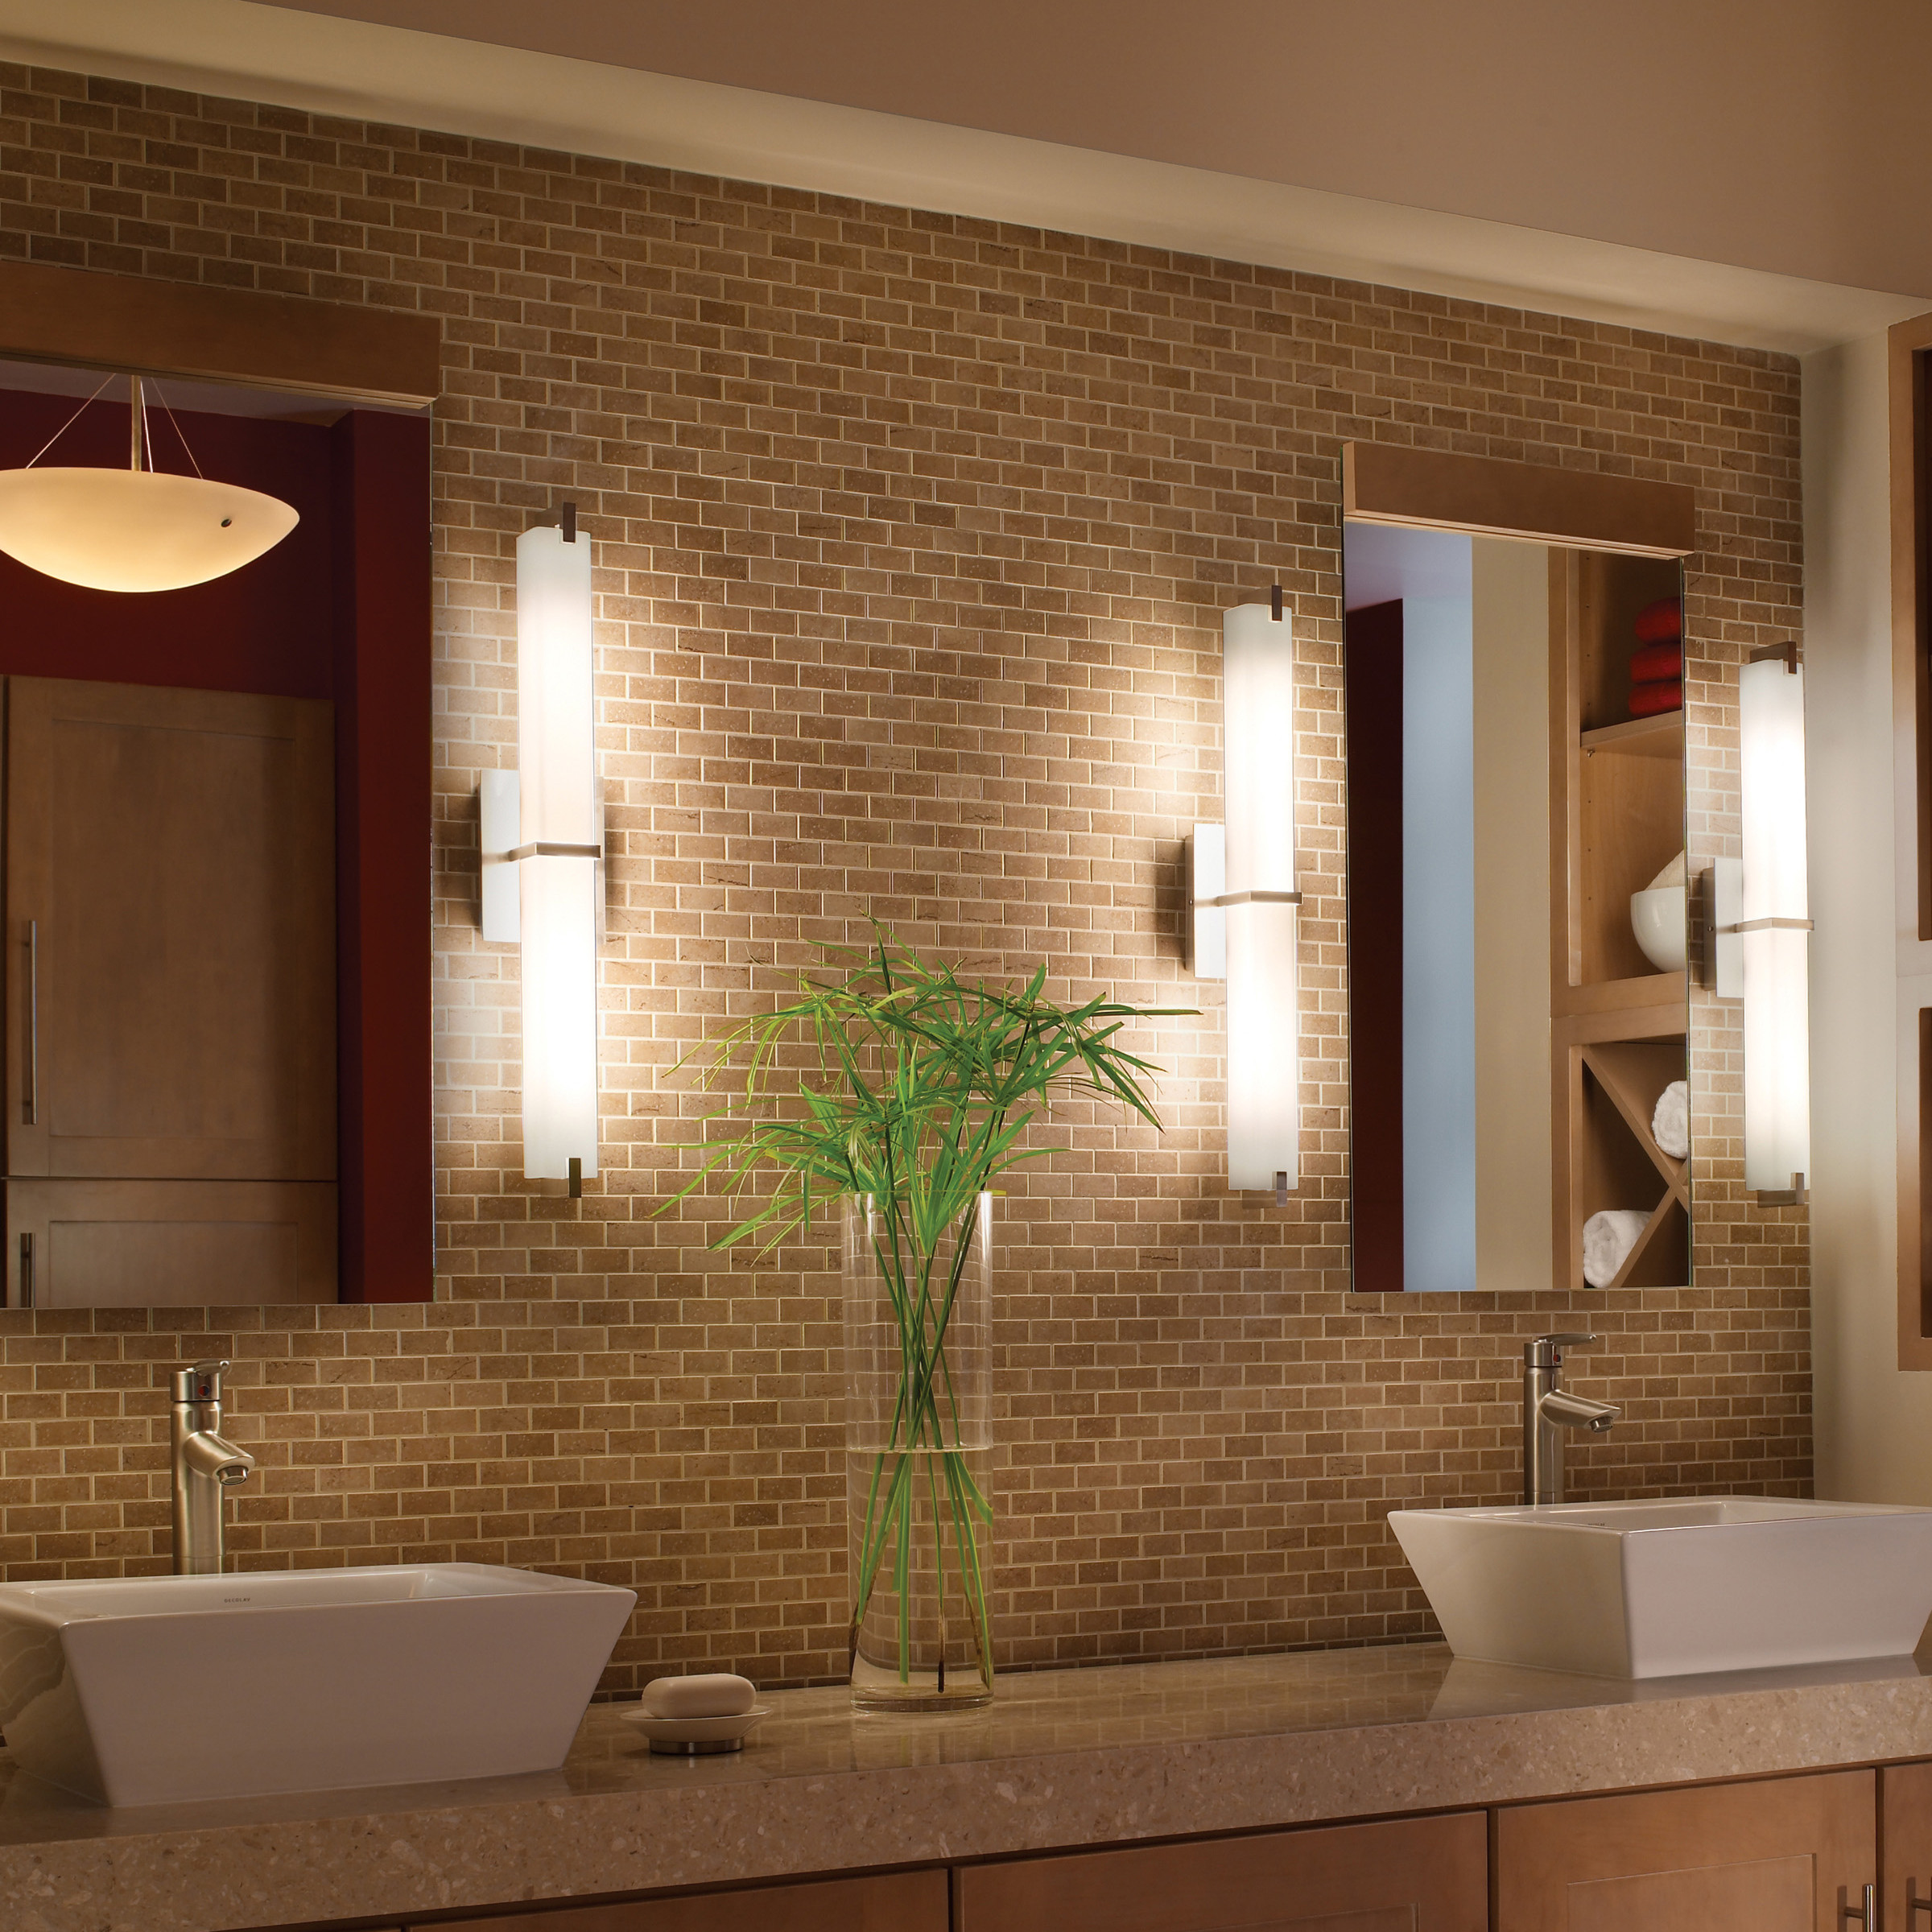 Bathroom Mirror Side Lights
 Lumens Highlights Favorites for Modern Bath Lighting